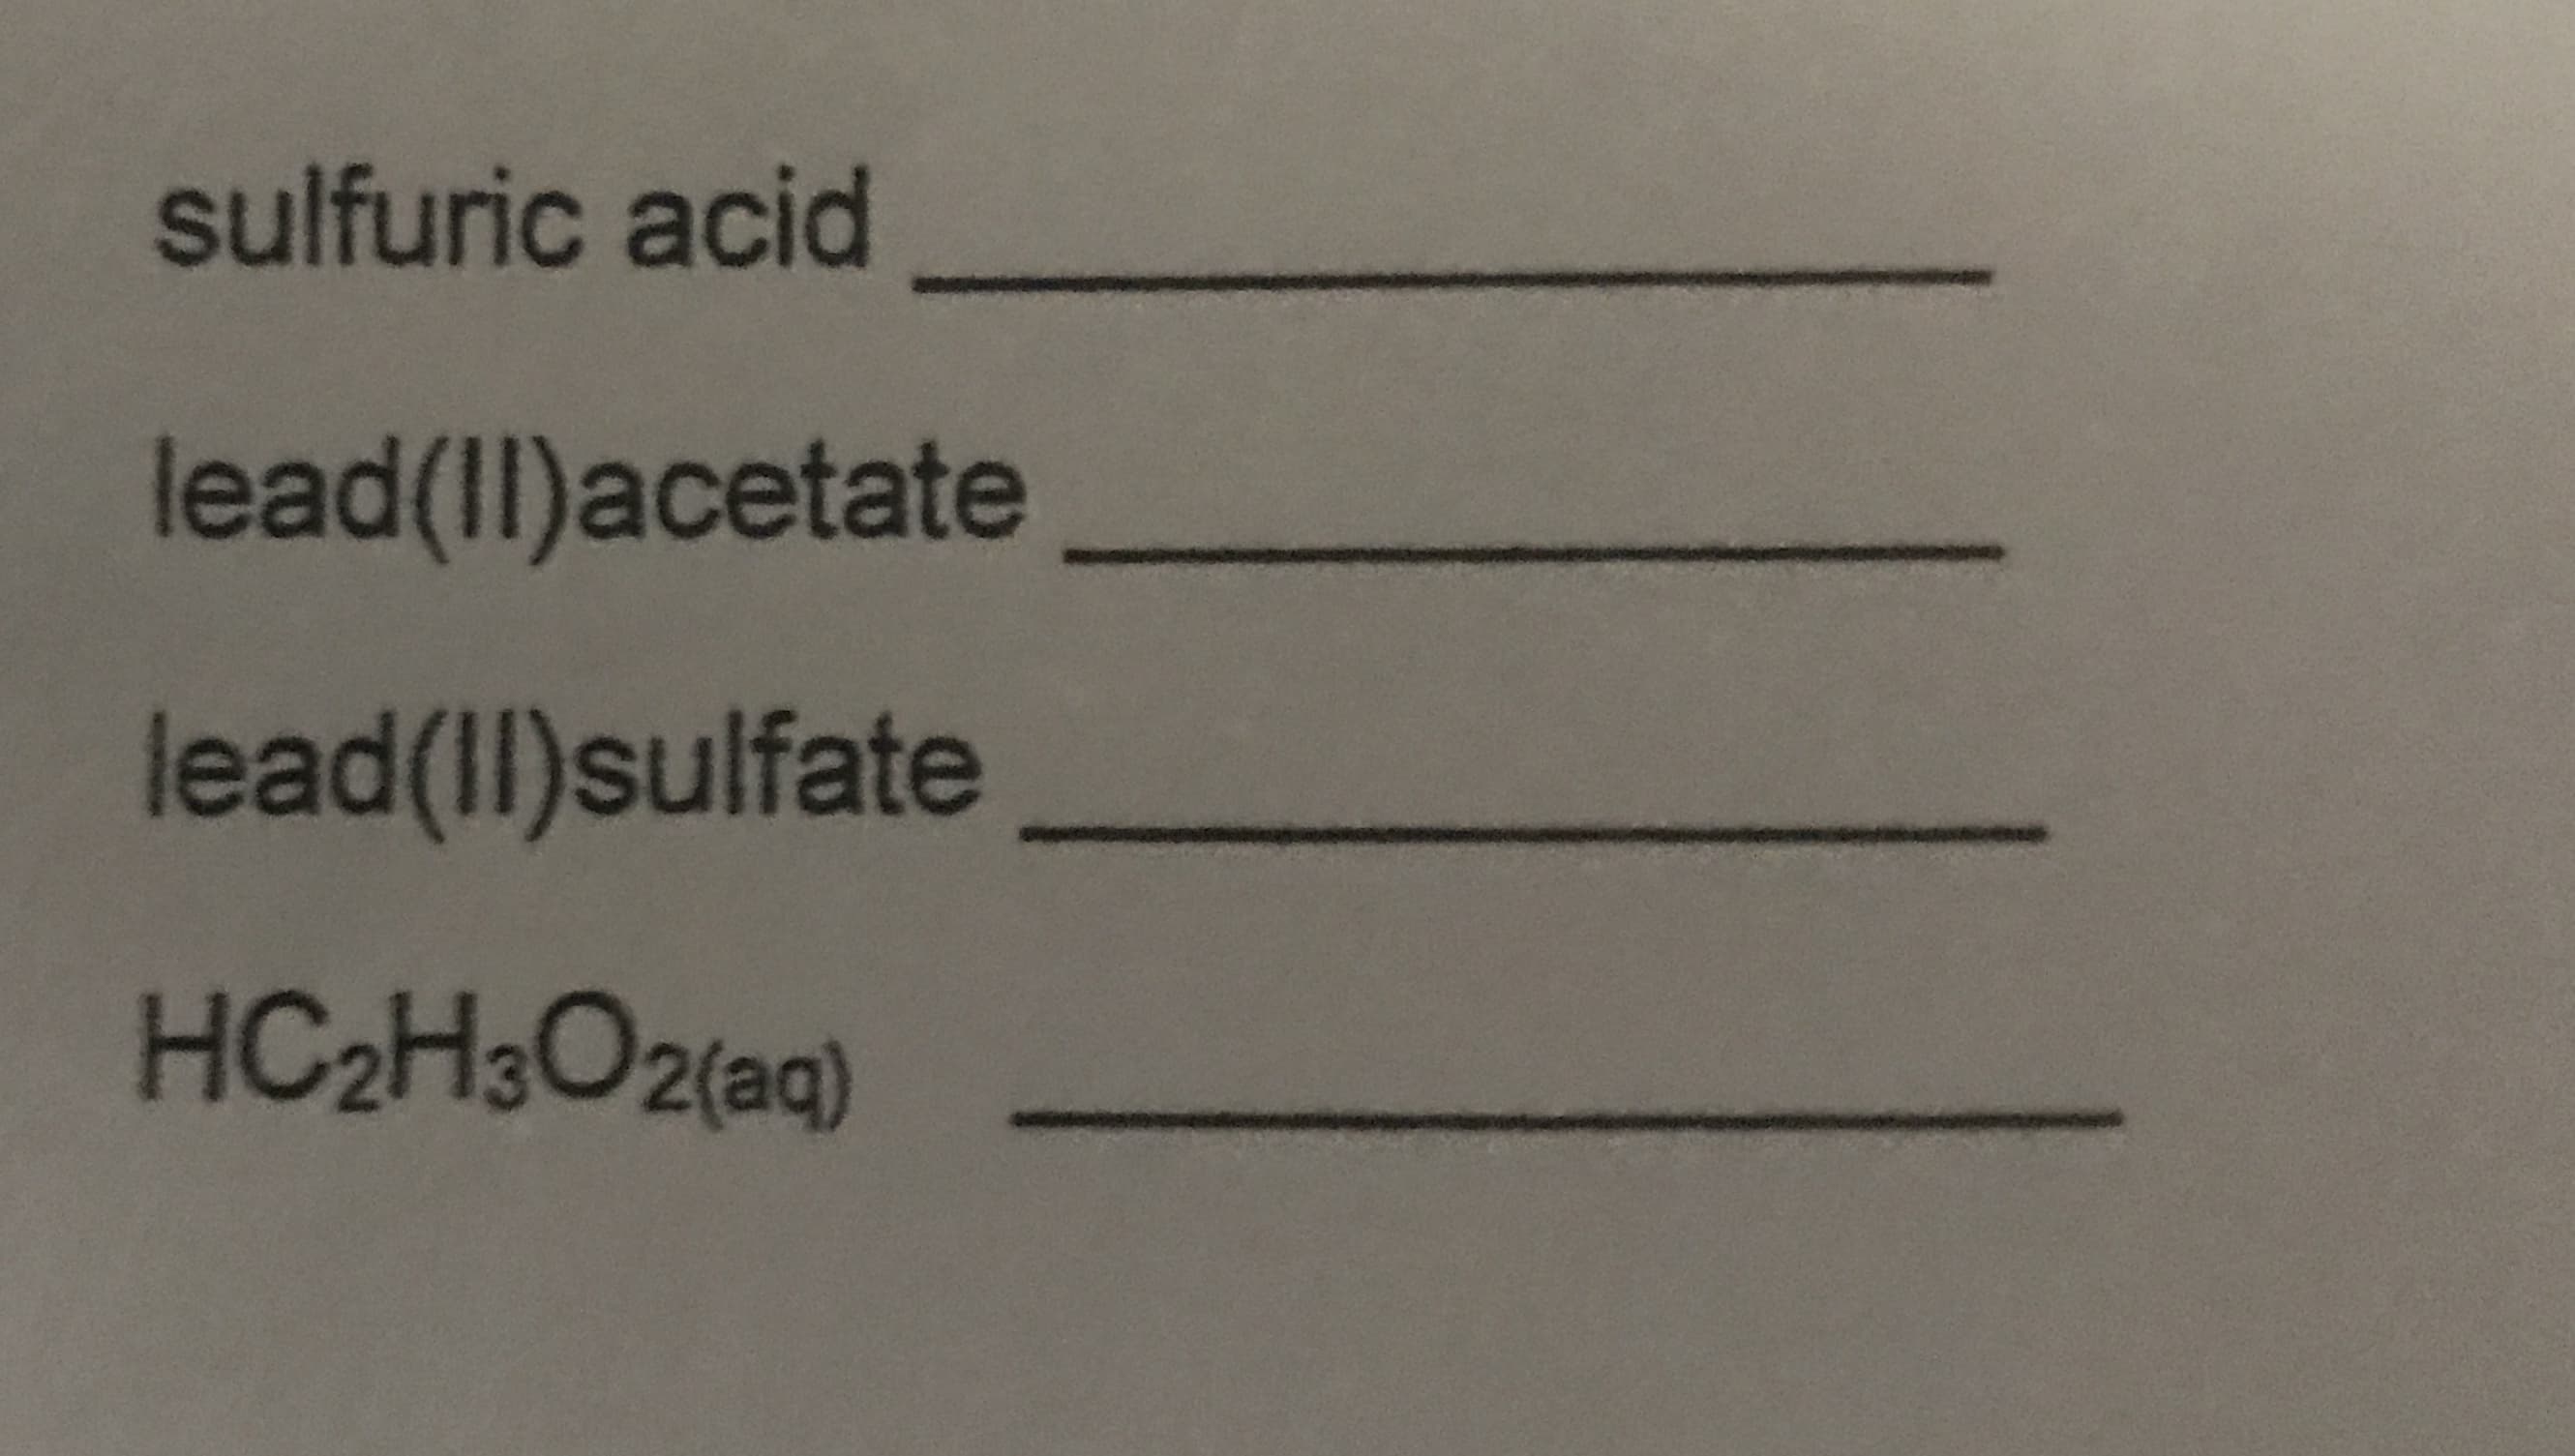 sulfuric acid
lead(II)acetate
lead(II)sulfate
HC2H3O2(aq)
